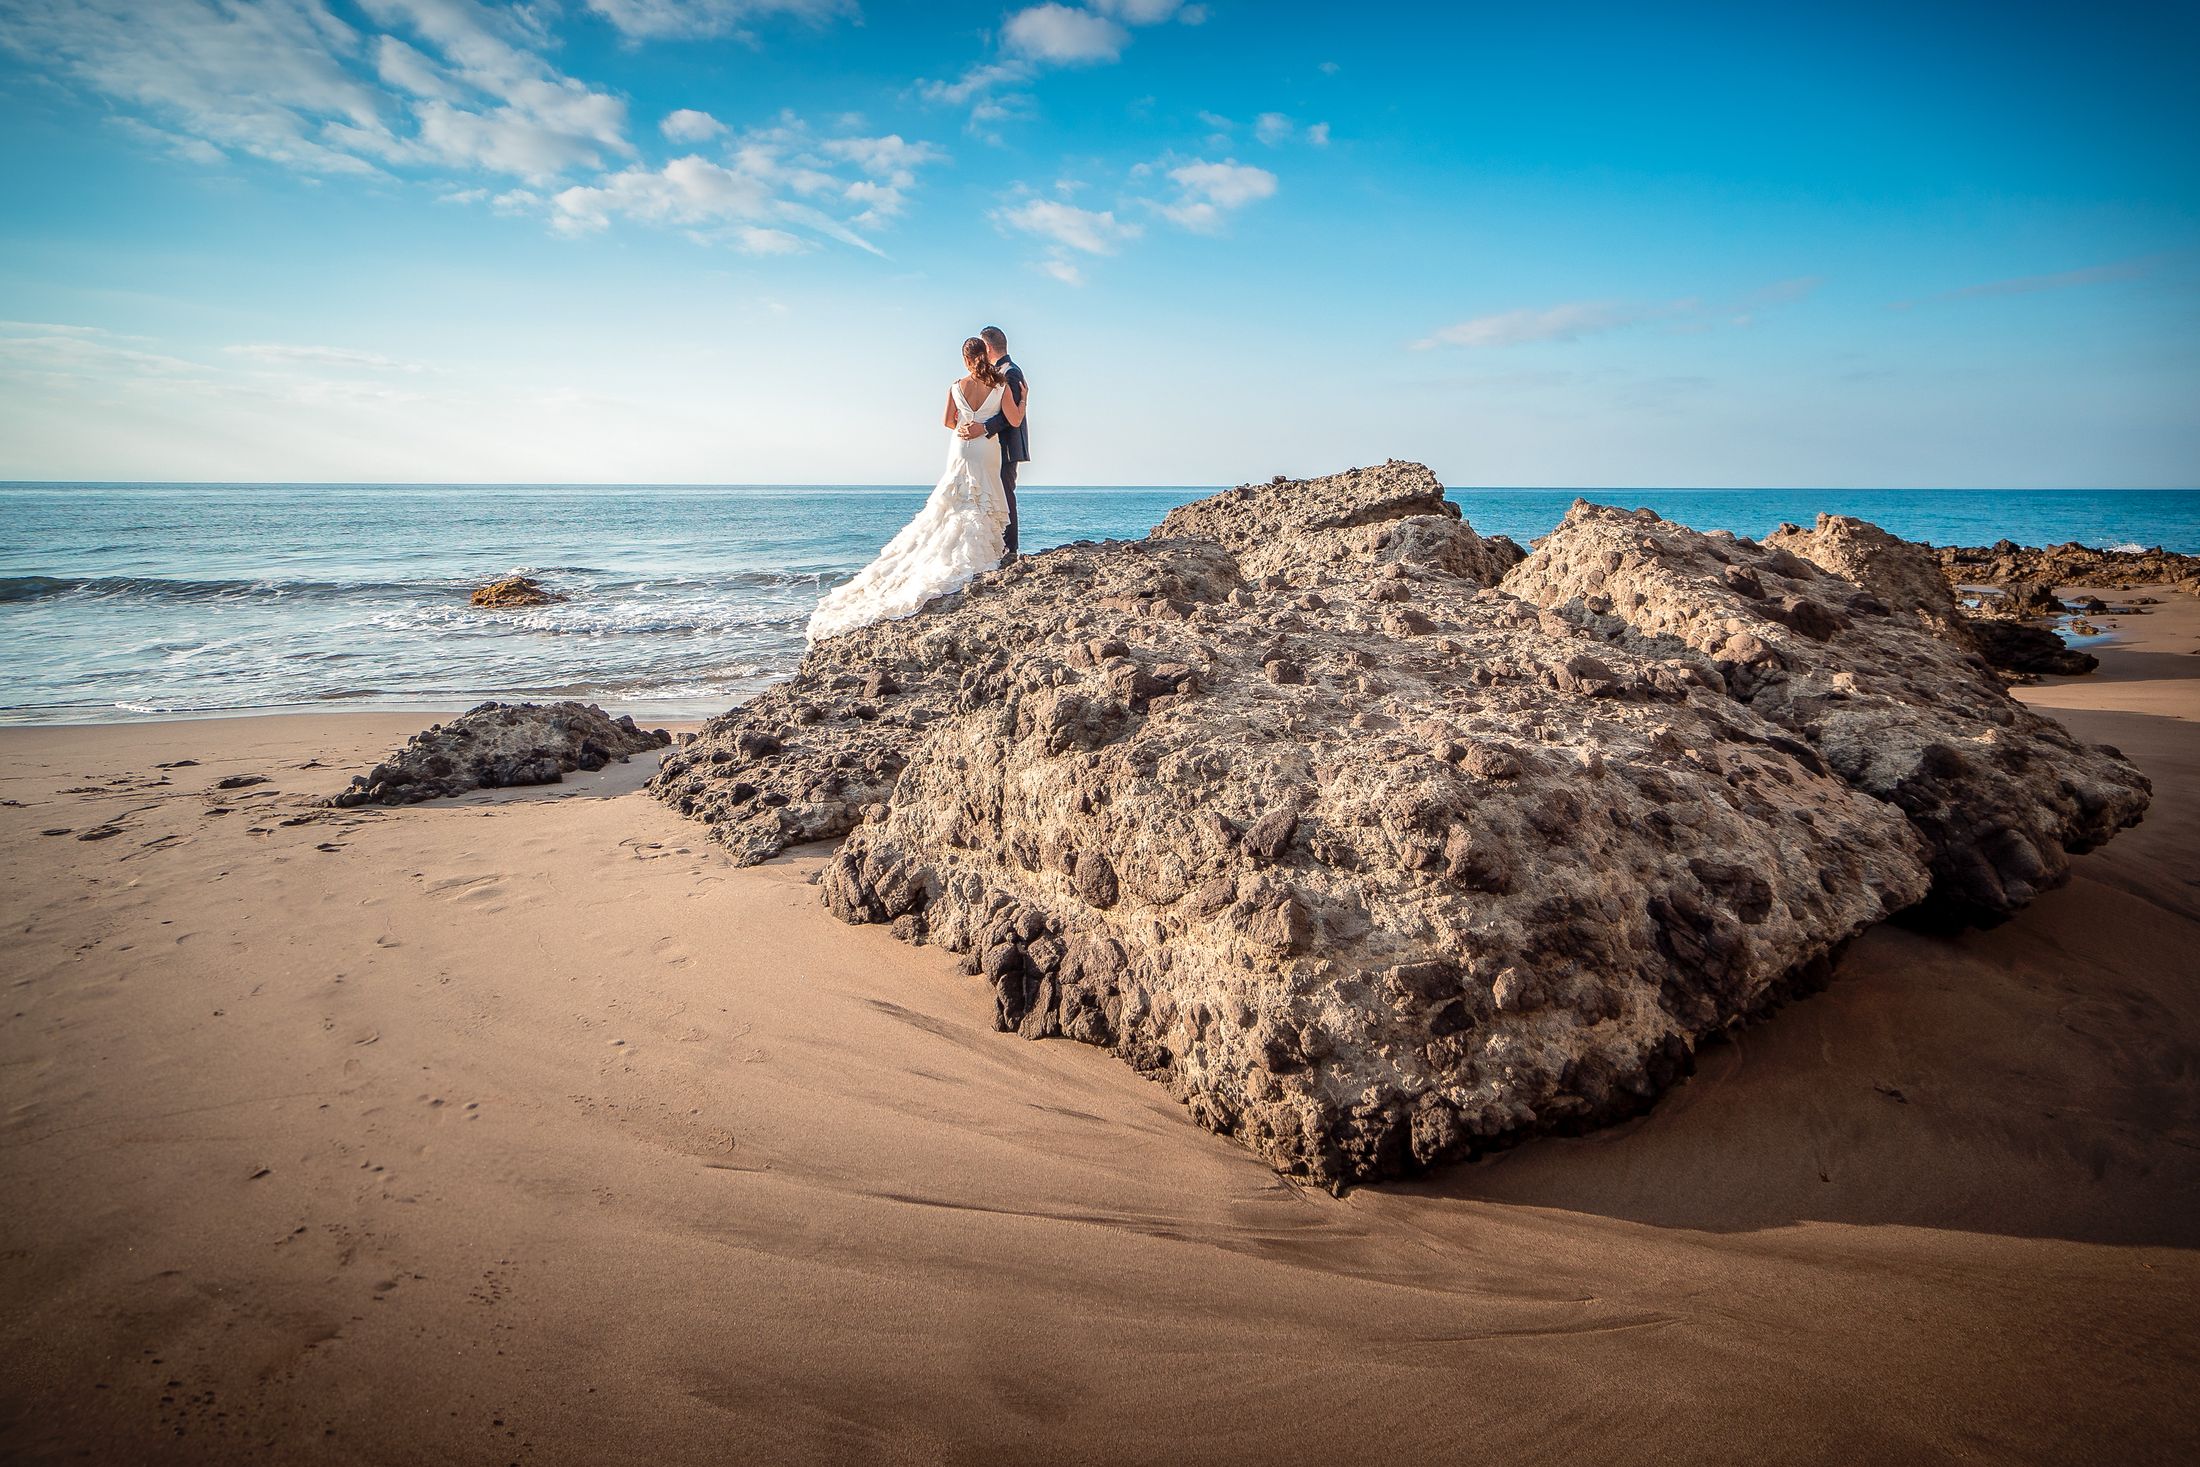 Post boda en la playa de Monsul